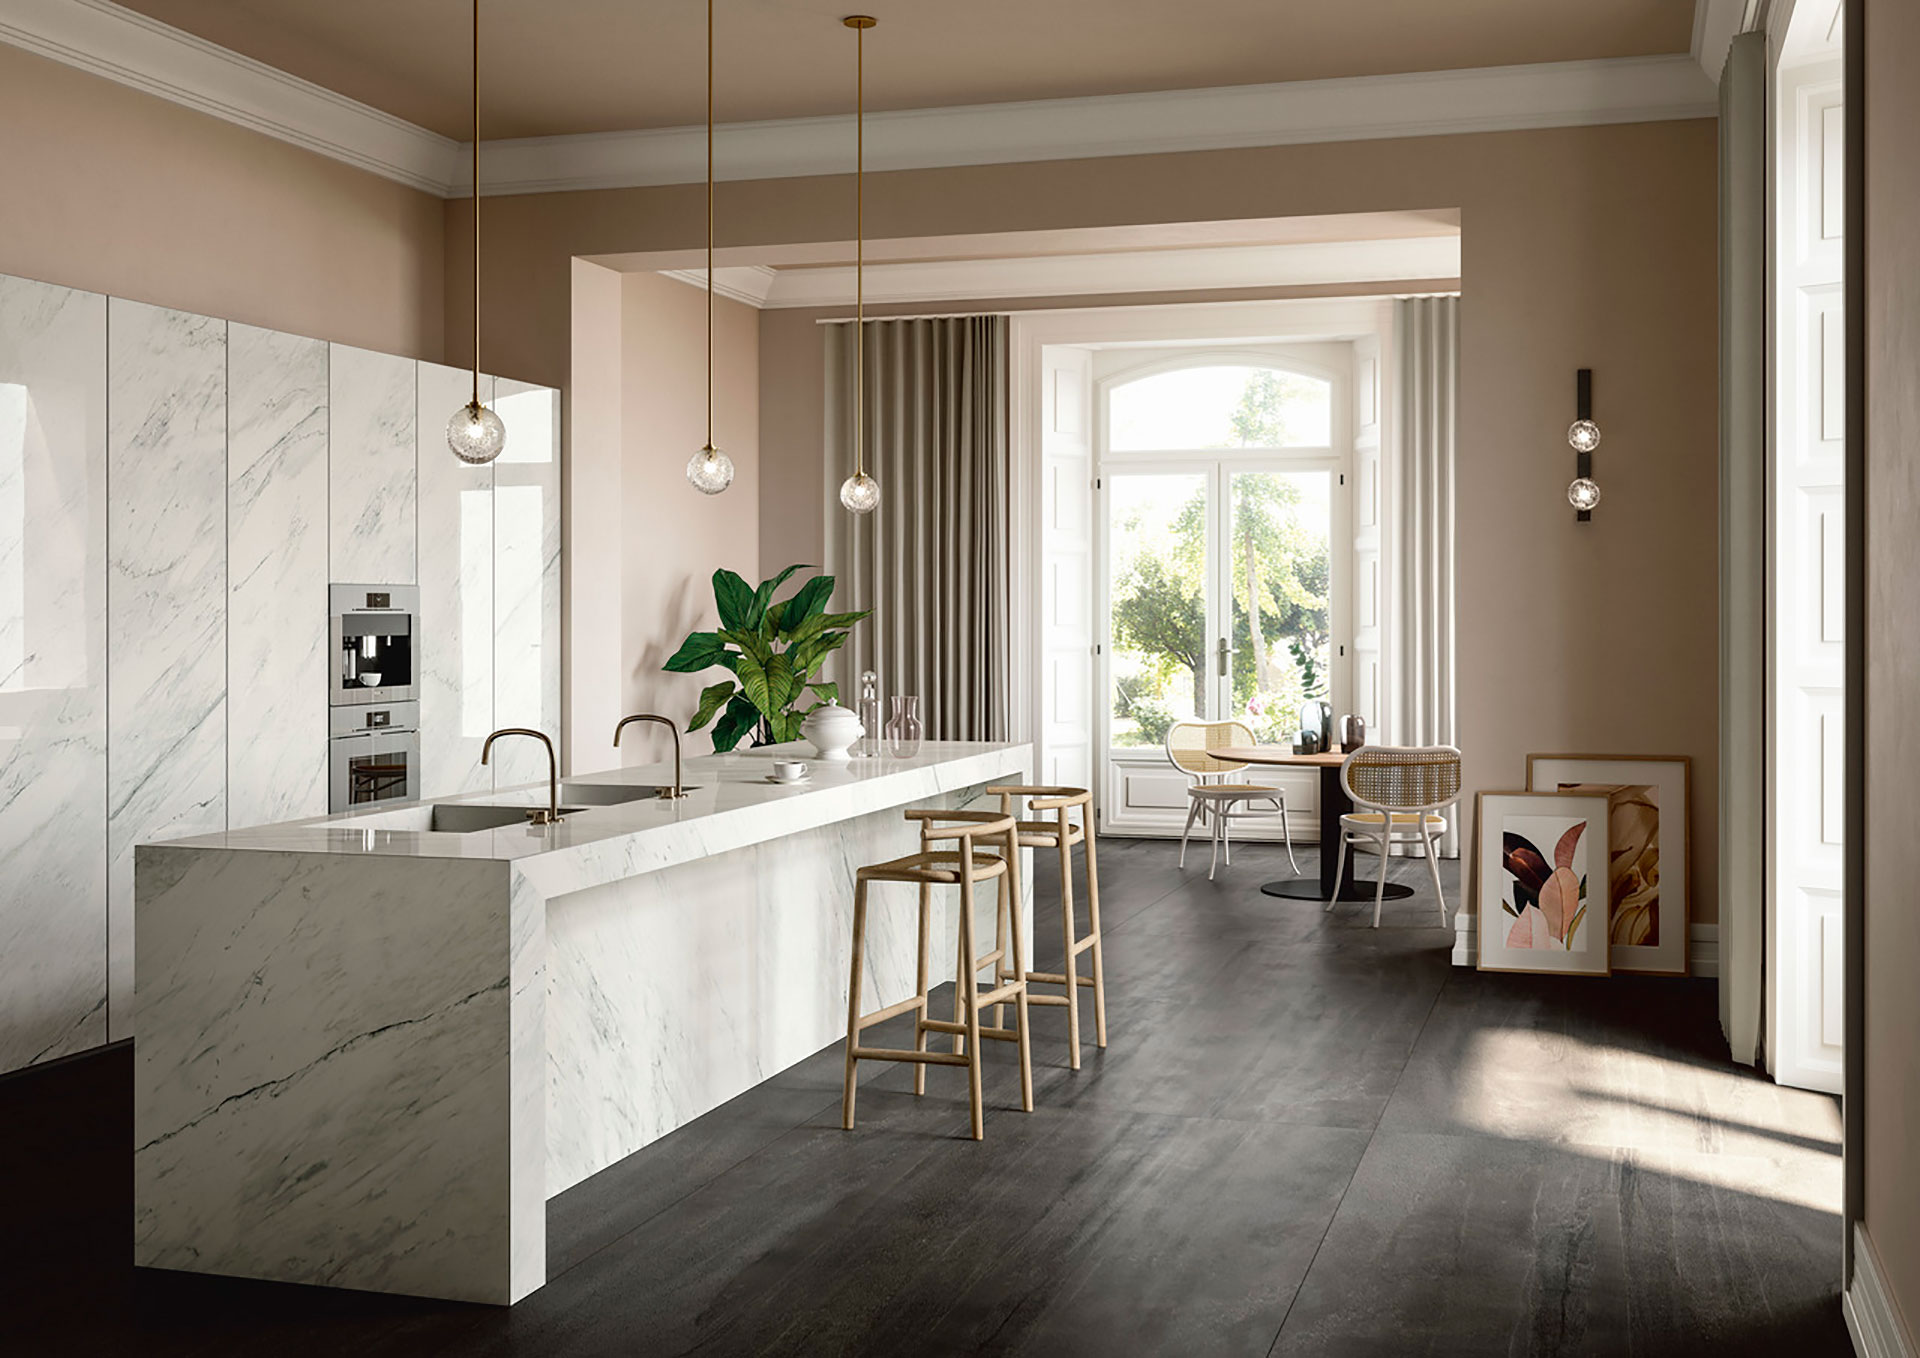 Sapienstone: design ideas for the kitchen of 2023